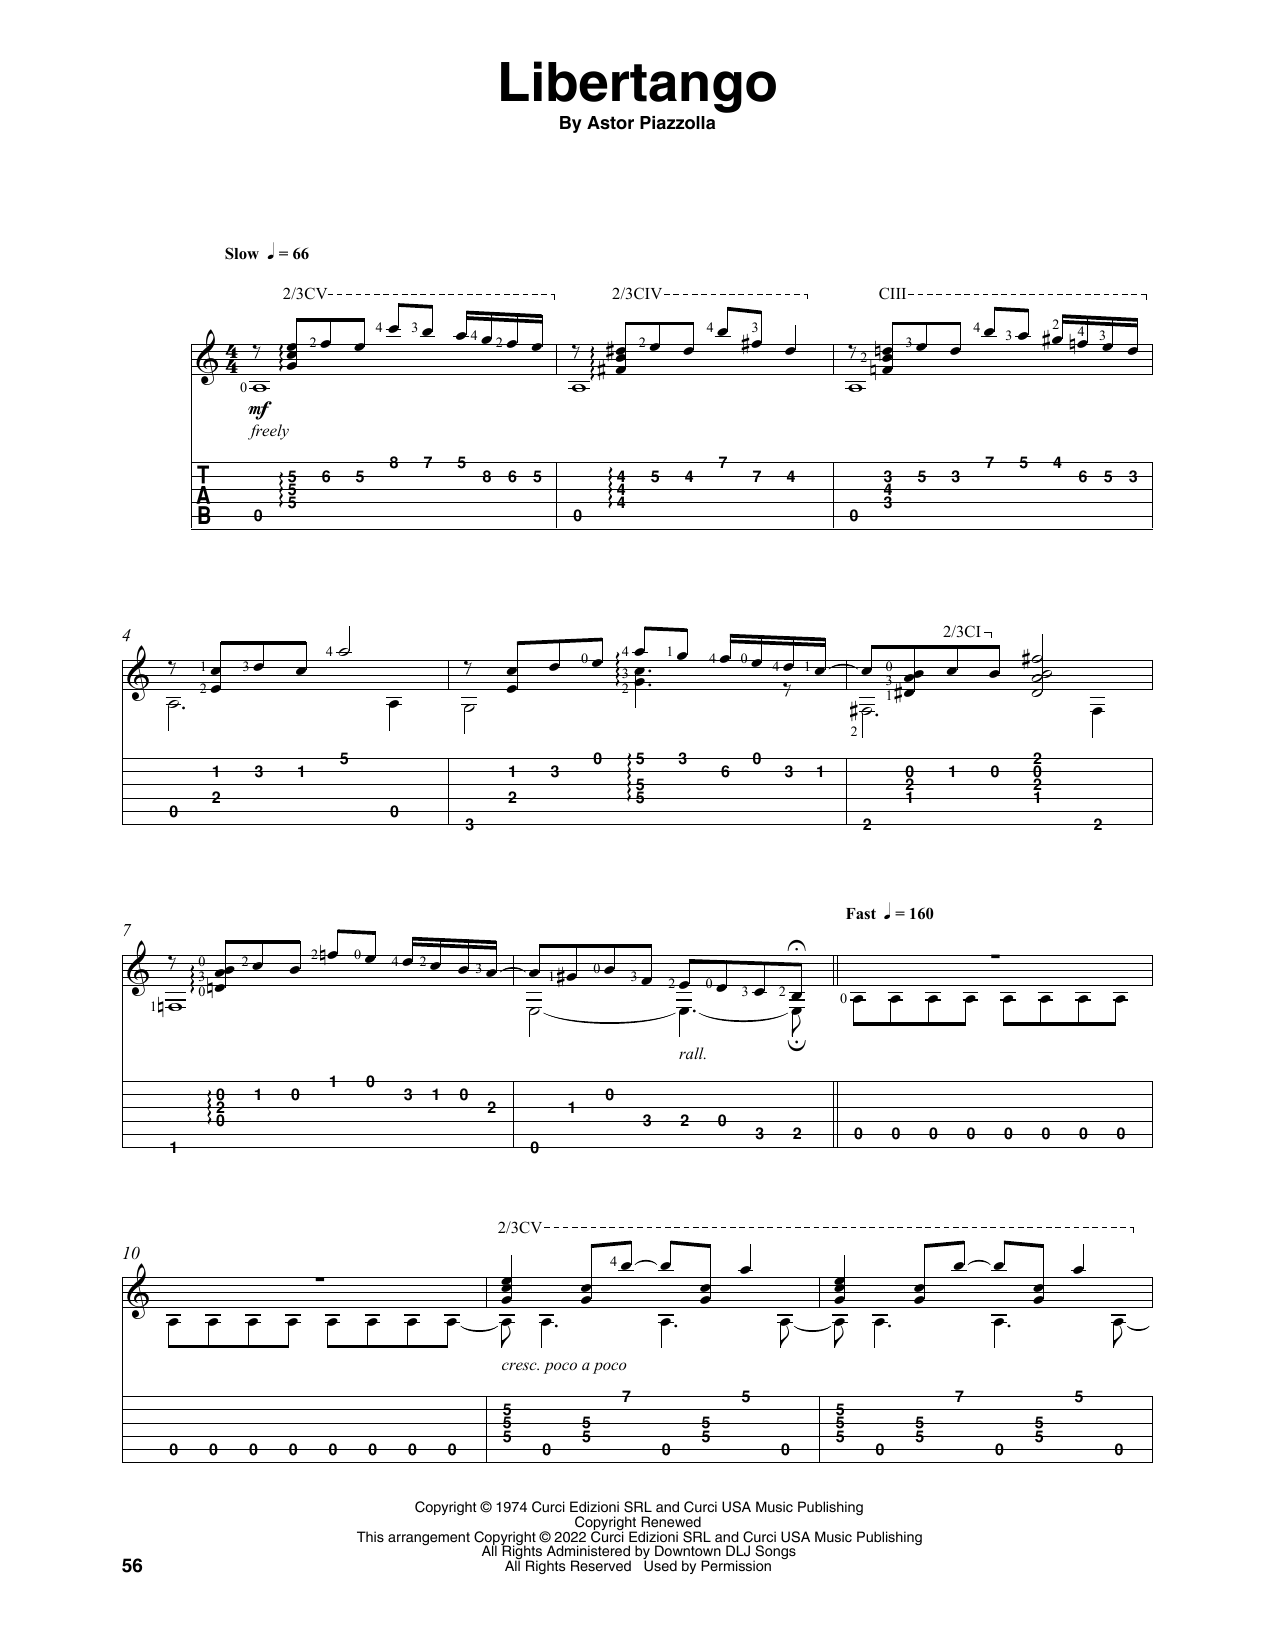 Astor Piazzolla Libertango (arr. Celil Refik Kaya) Sheet Music Notes & Chords for Solo Guitar - Download or Print PDF